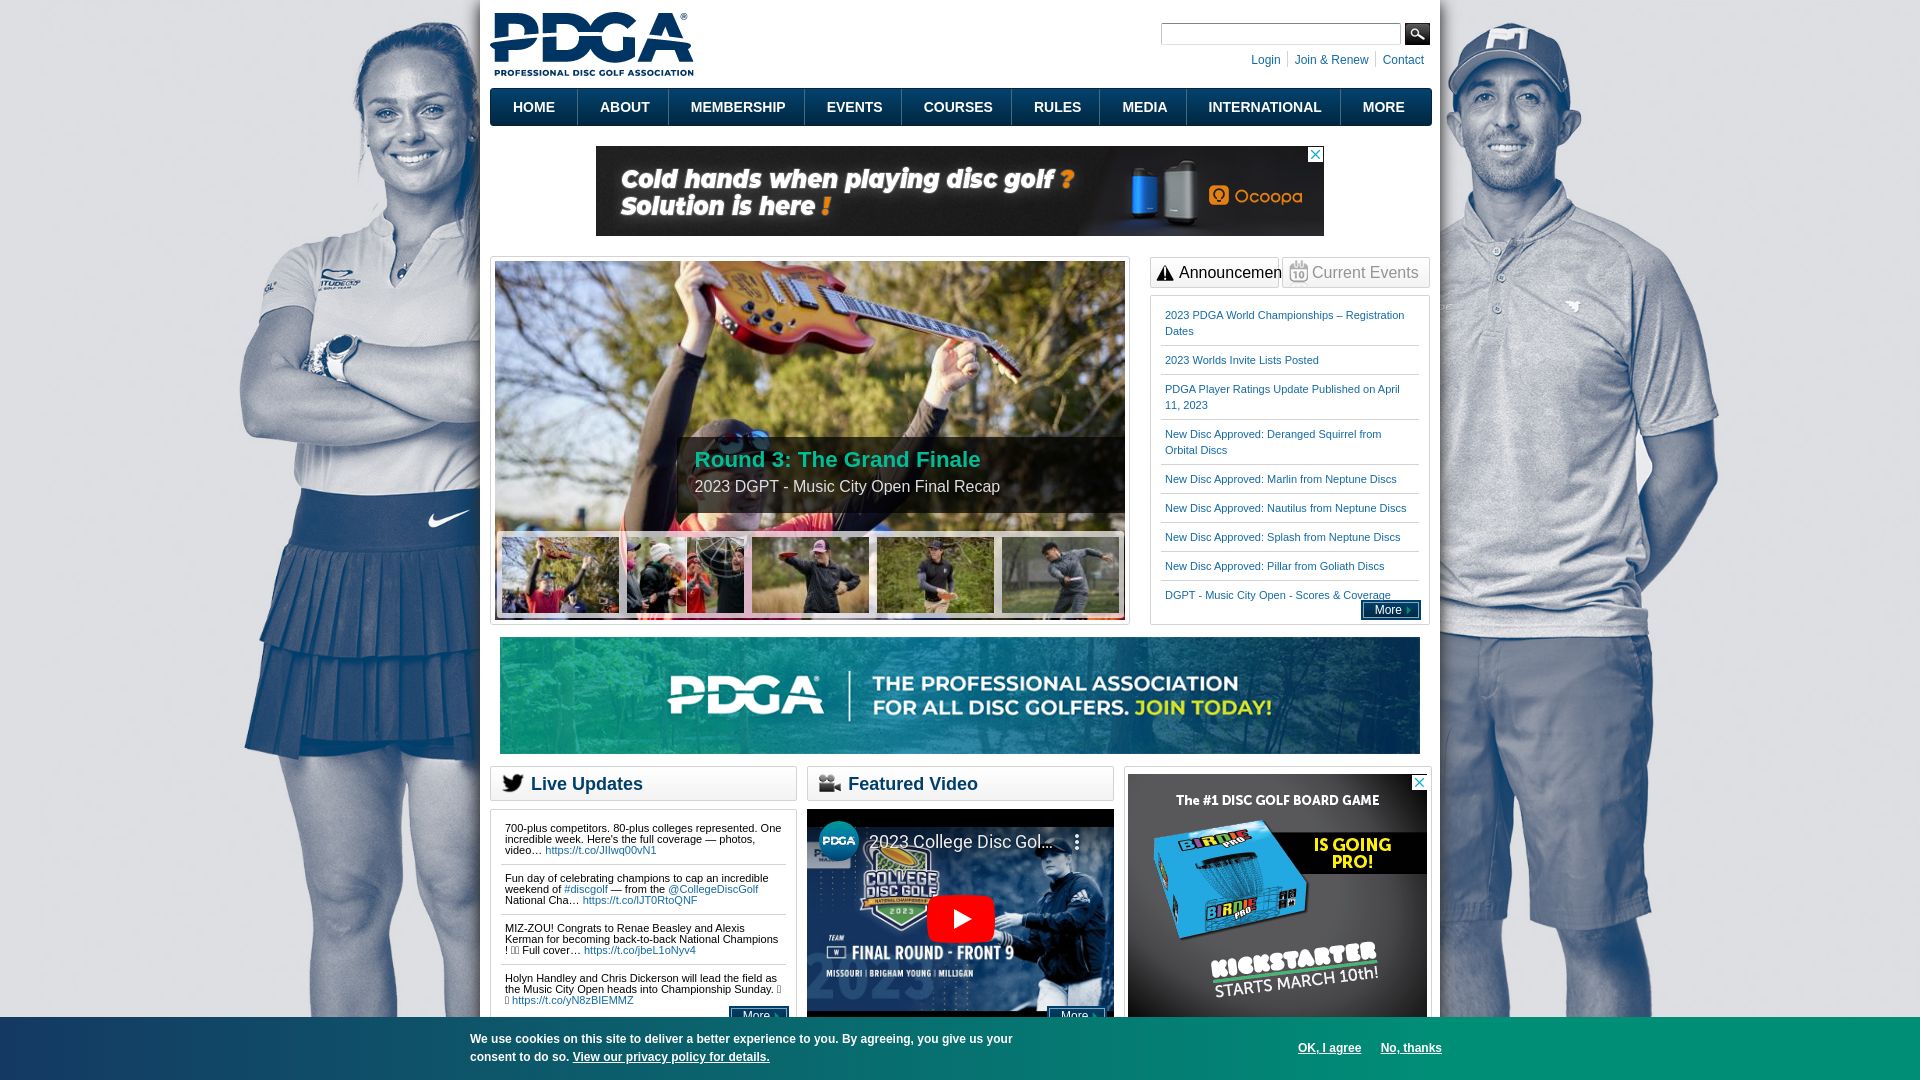 Website status pdga.com is   ONLINE